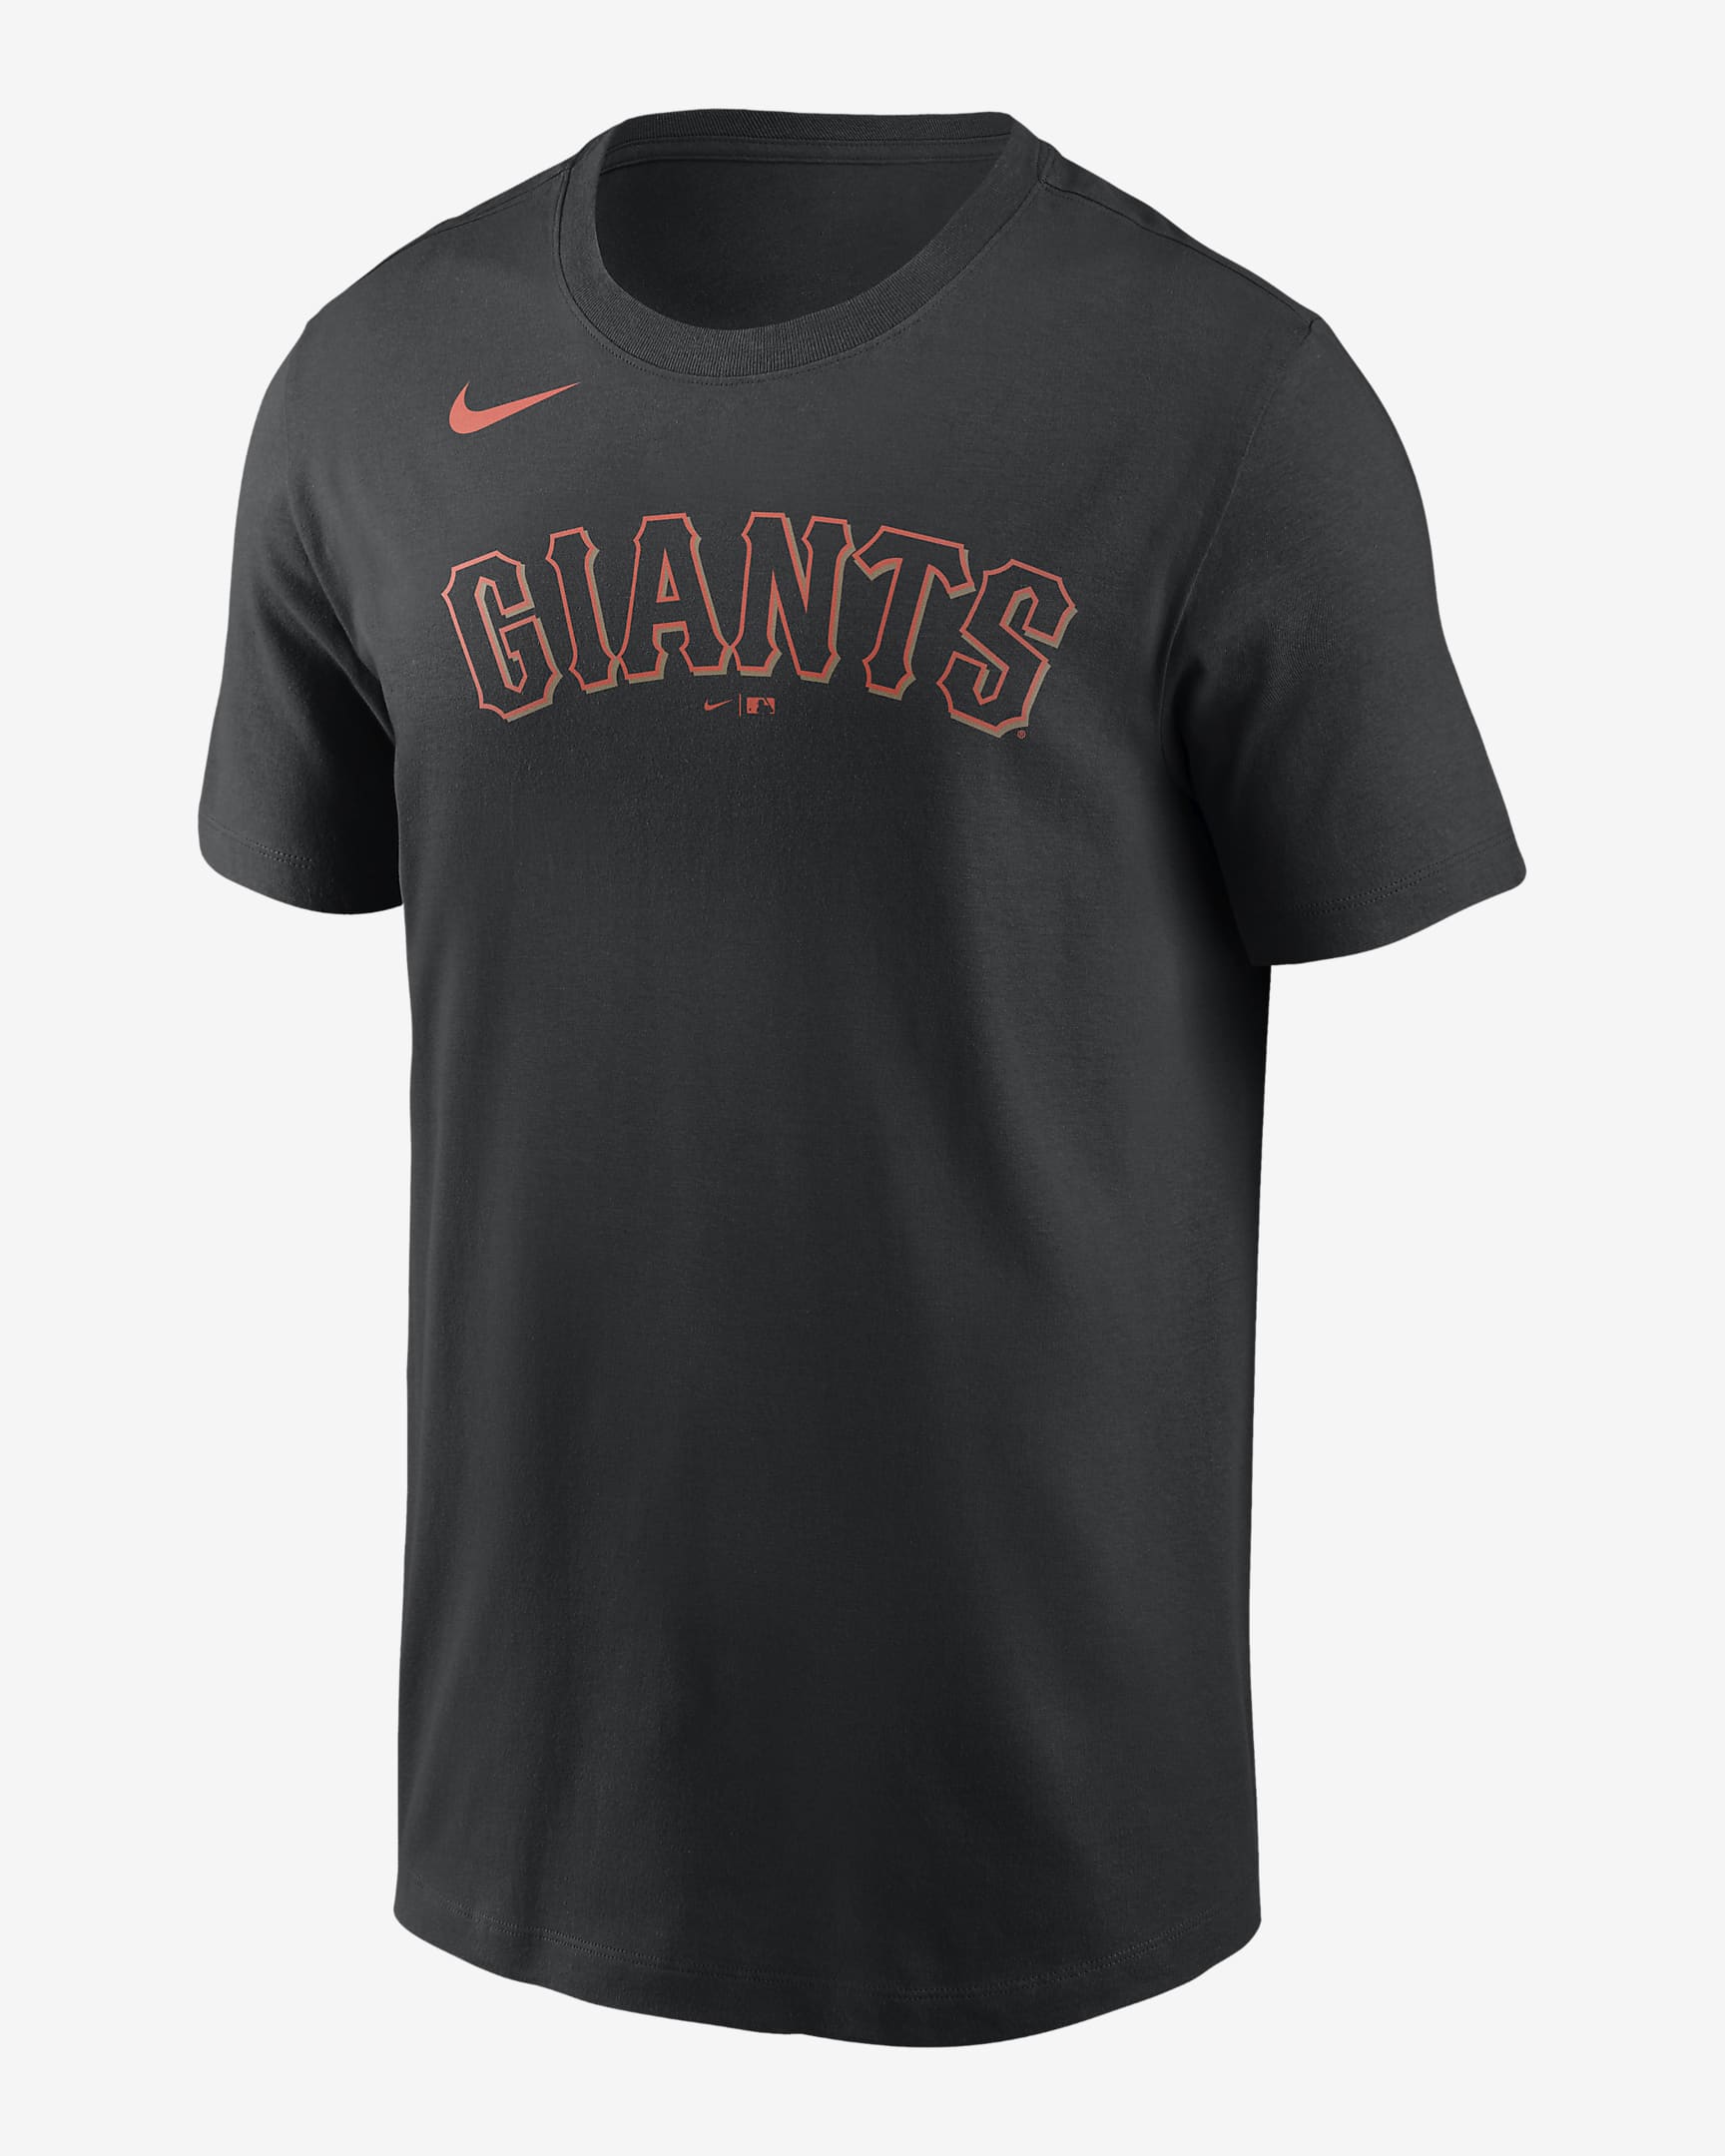 MLB San Francisco Giants (Buster Posey) Men's T-Shirt. Nike.com